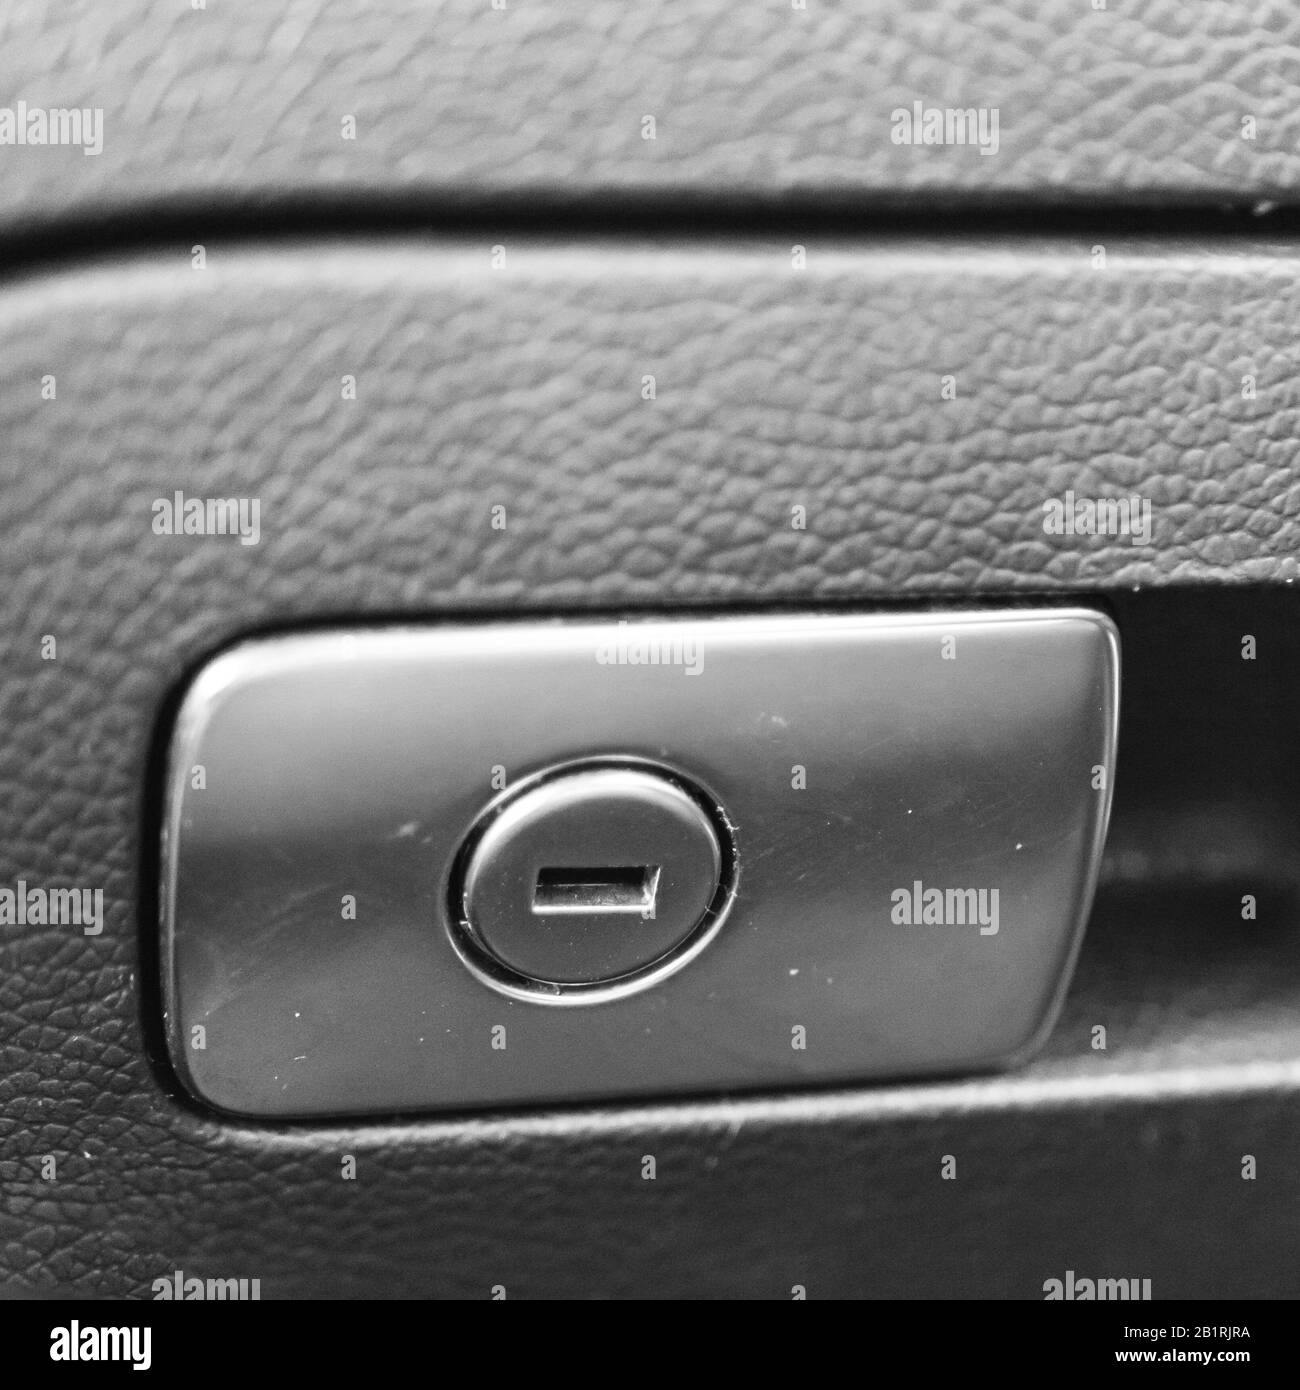 Close up photo inside a car, keyhole of closed car glove box. Stock Photo